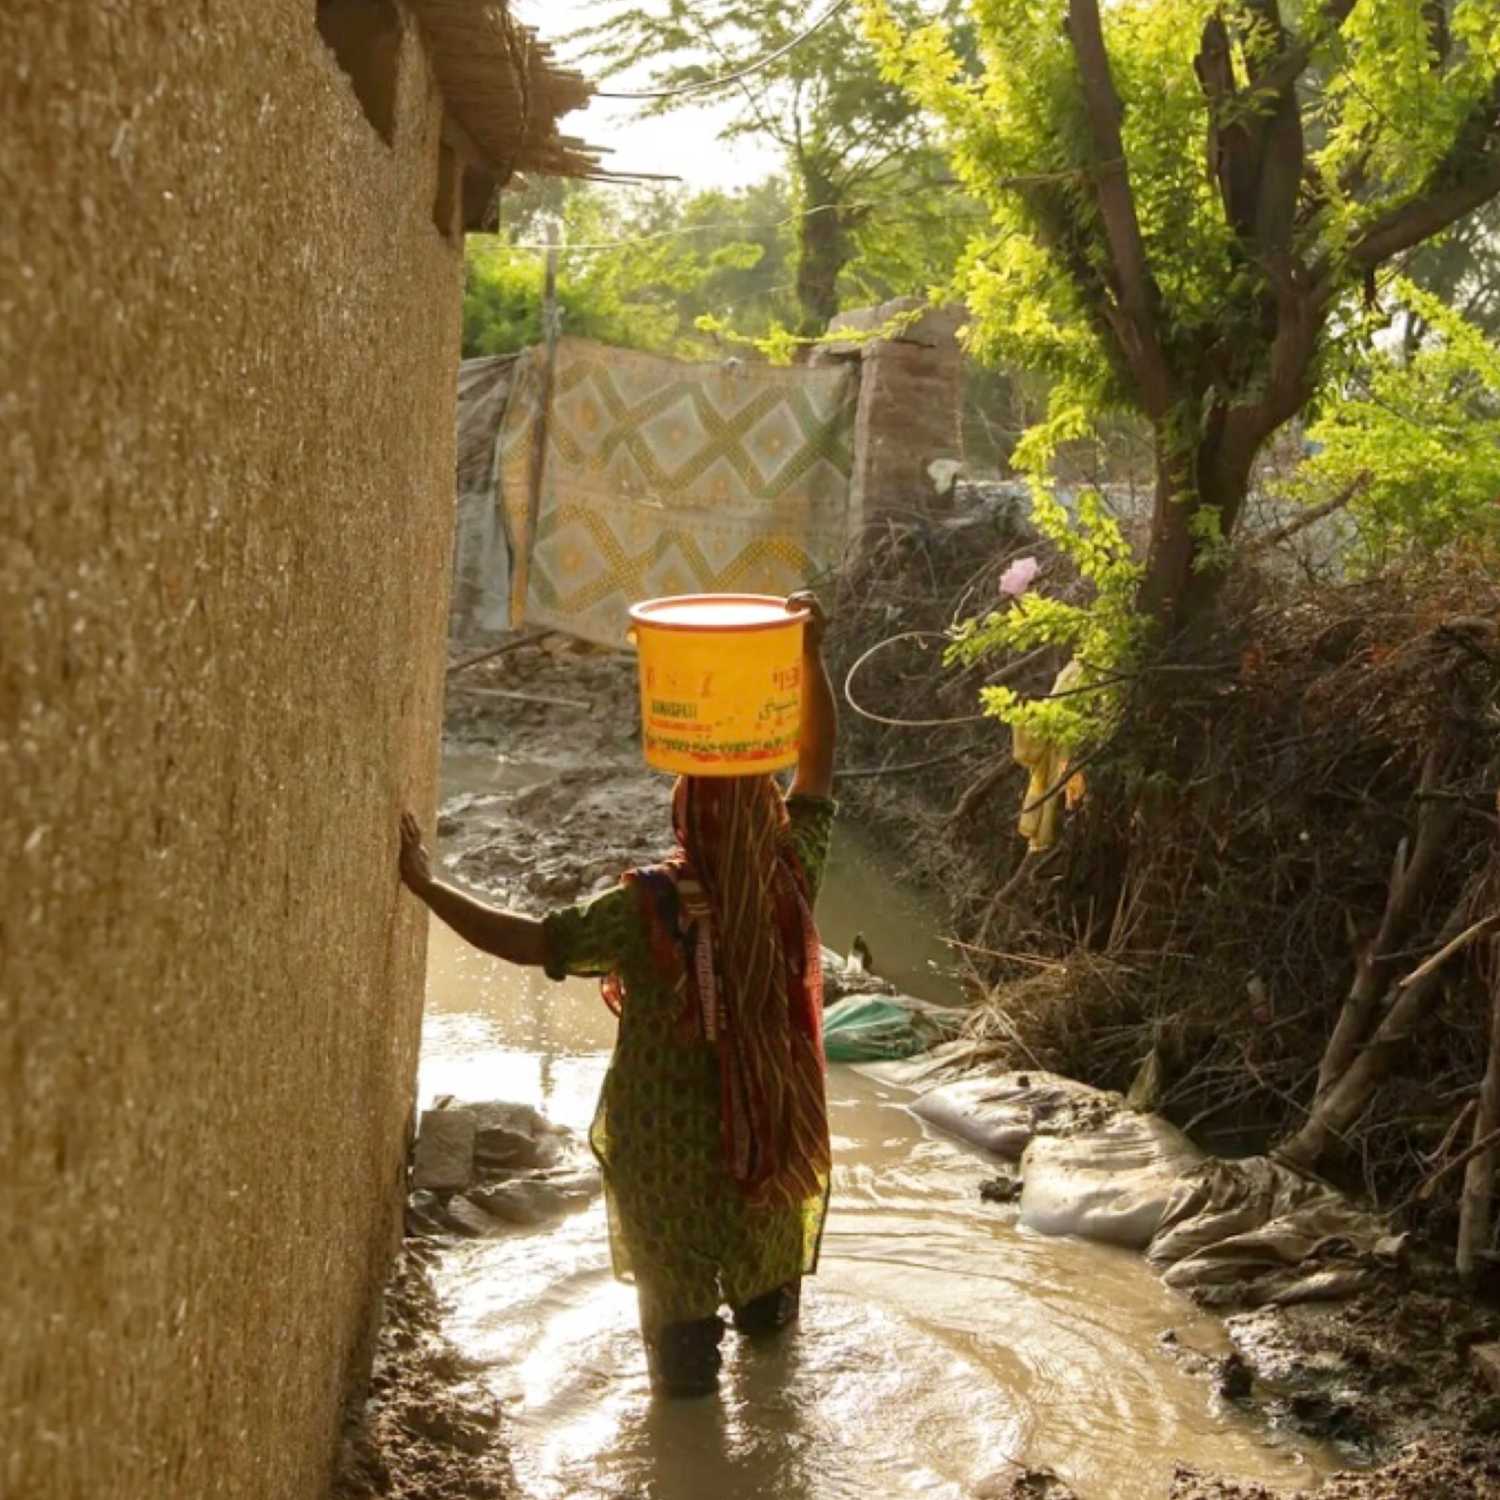 Water Security Challenges in Pakistan